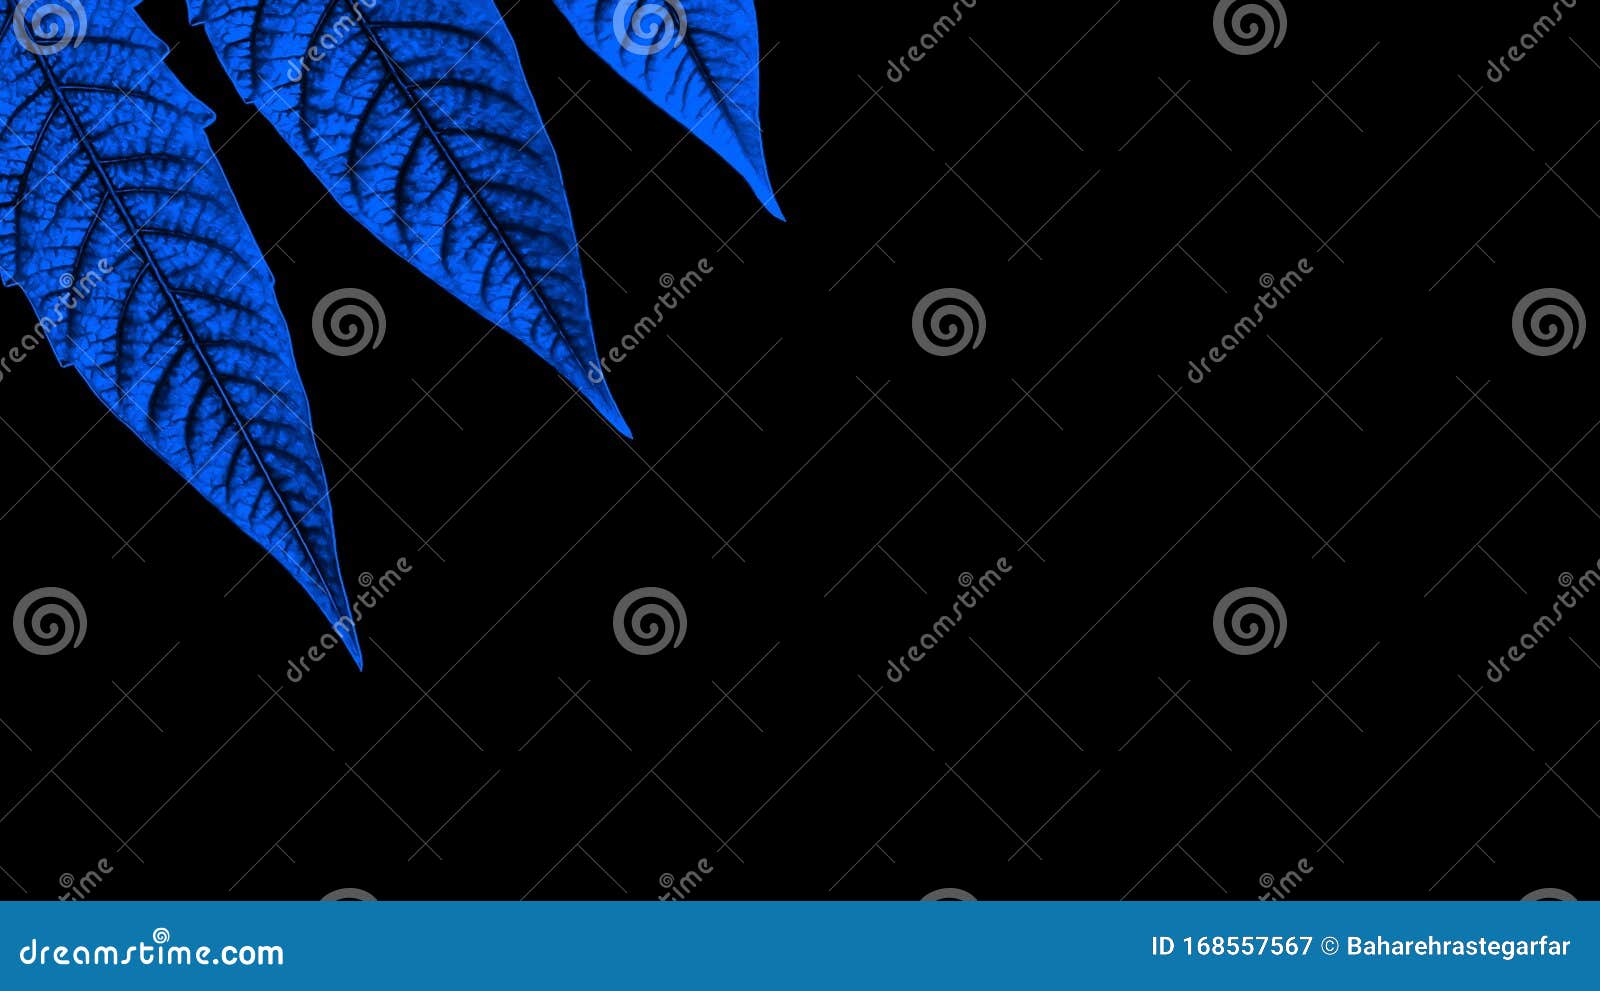 Blue Leaves Isolated on Black Background Stock Image - Image of leaf